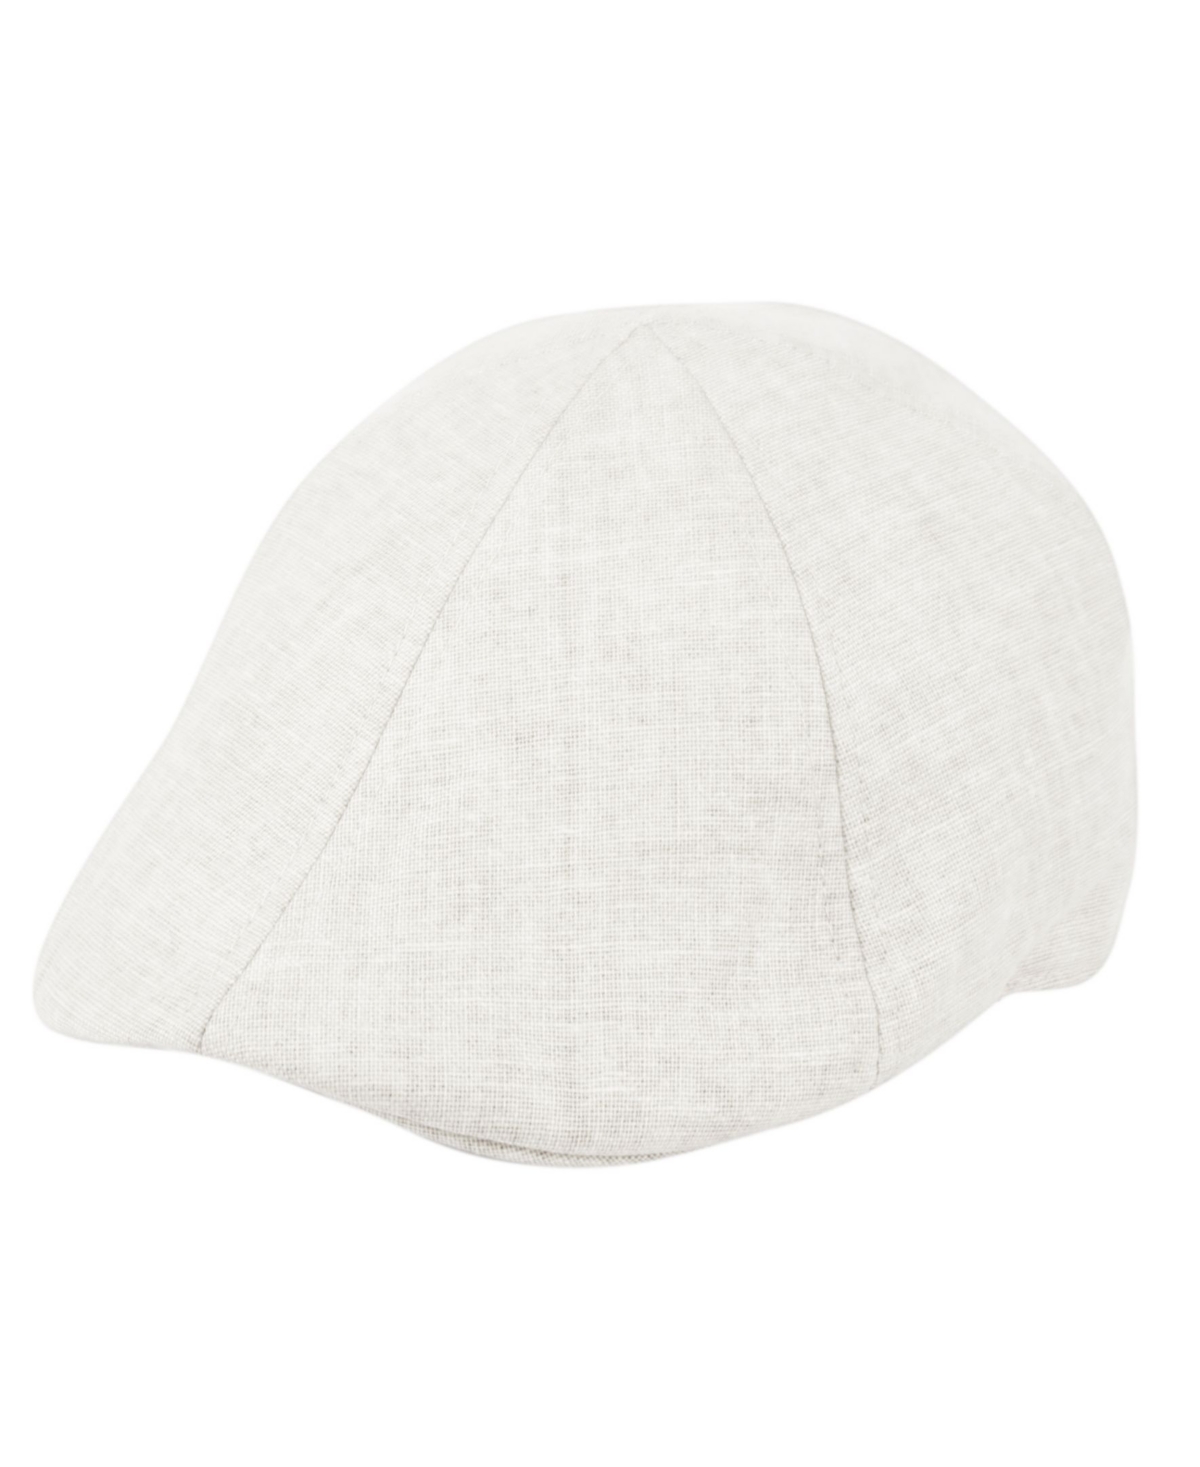 Epoch Hats Company Women's Duckbill Ivy Linen Cap